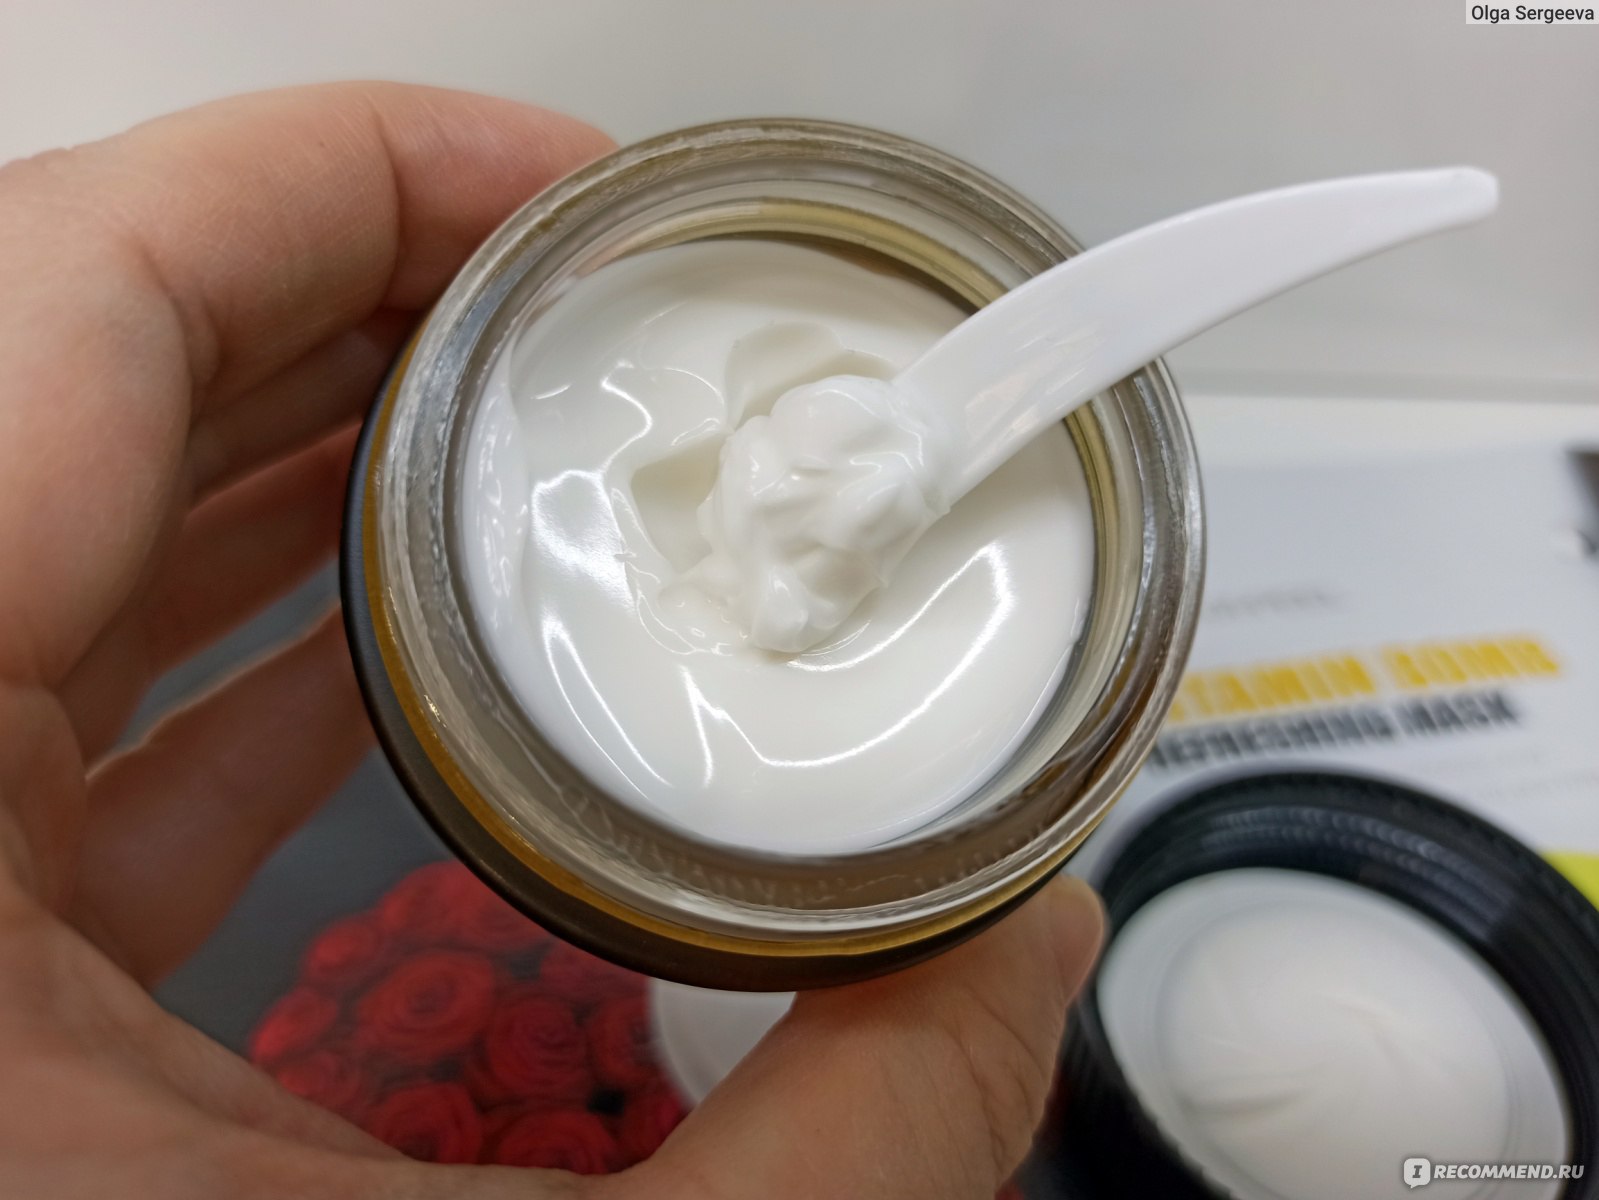 Крем для лица Medi-peel Bor-Tox Peptide Cream фото